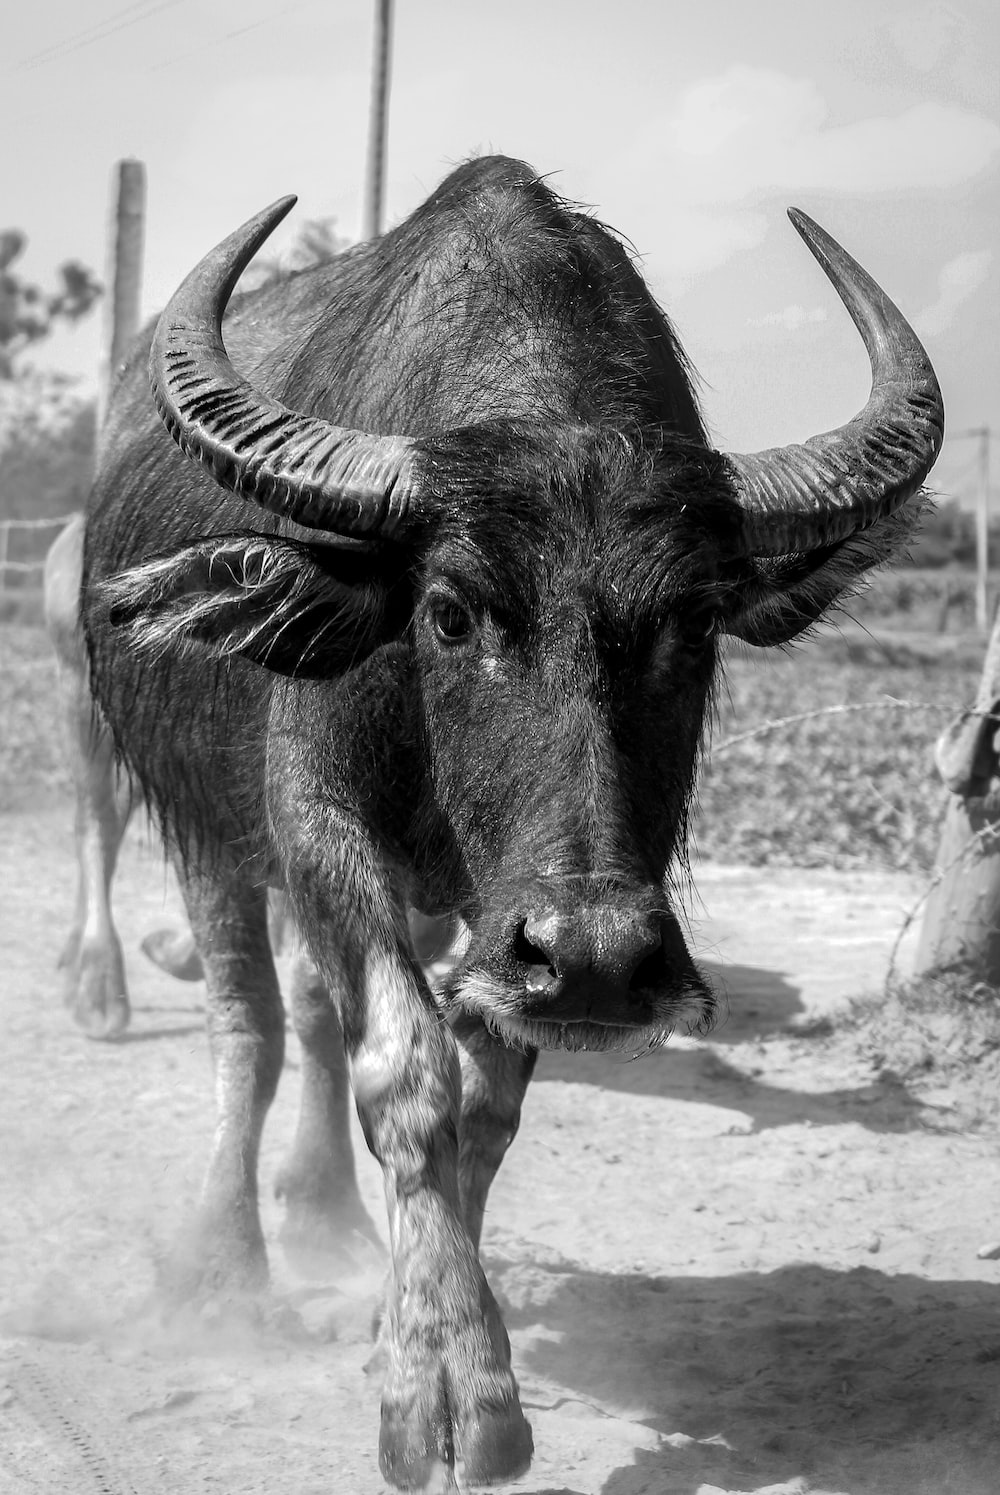 Black & White Water Buffalo Image